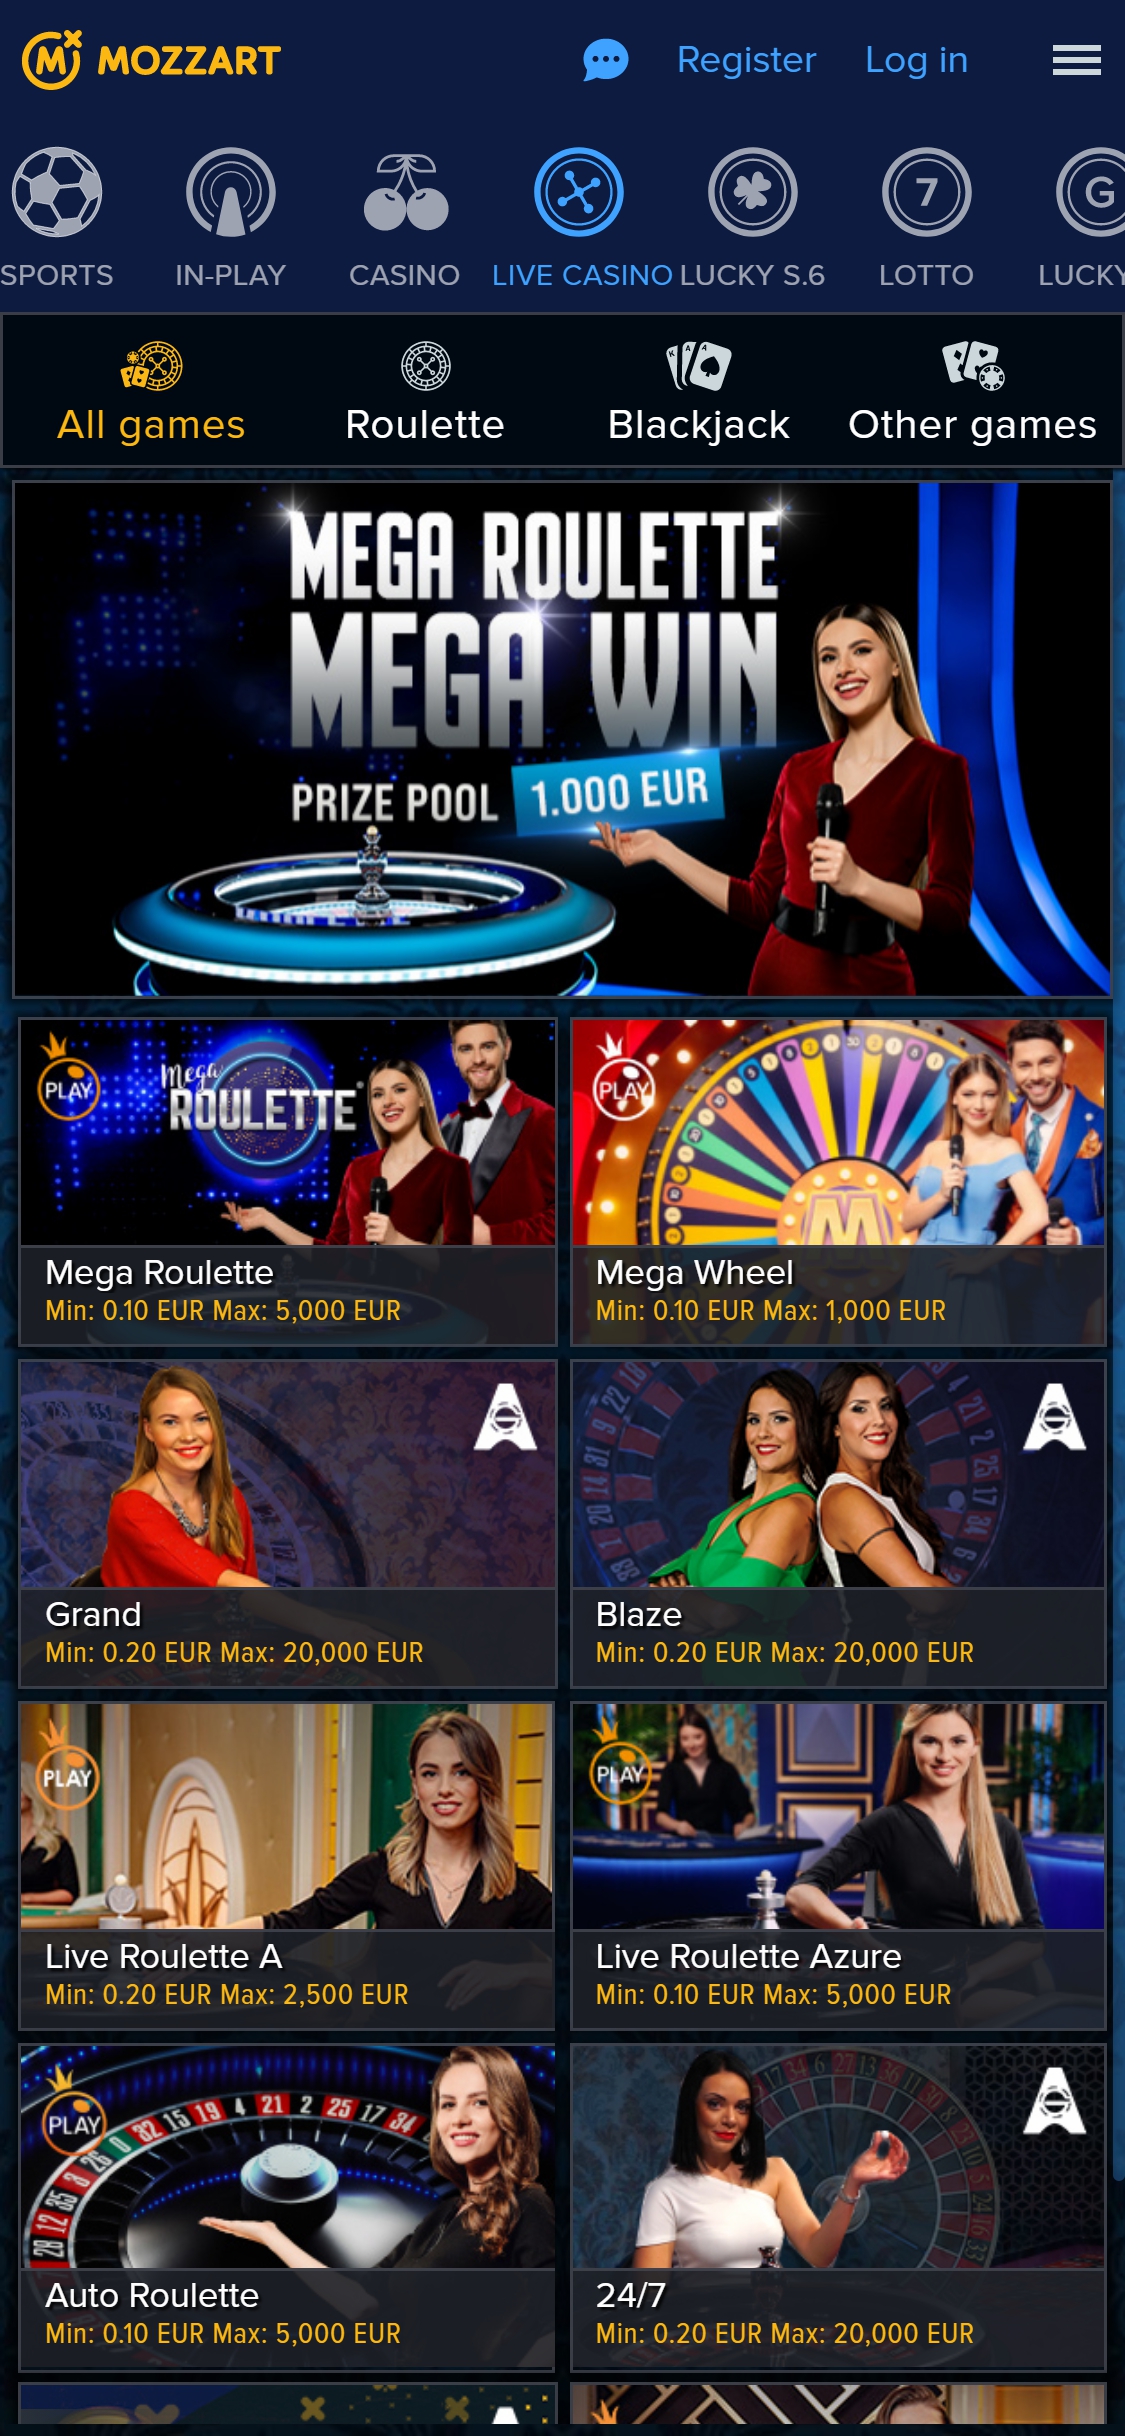 Mozzart Casino Mobile Live Dealer Games Review